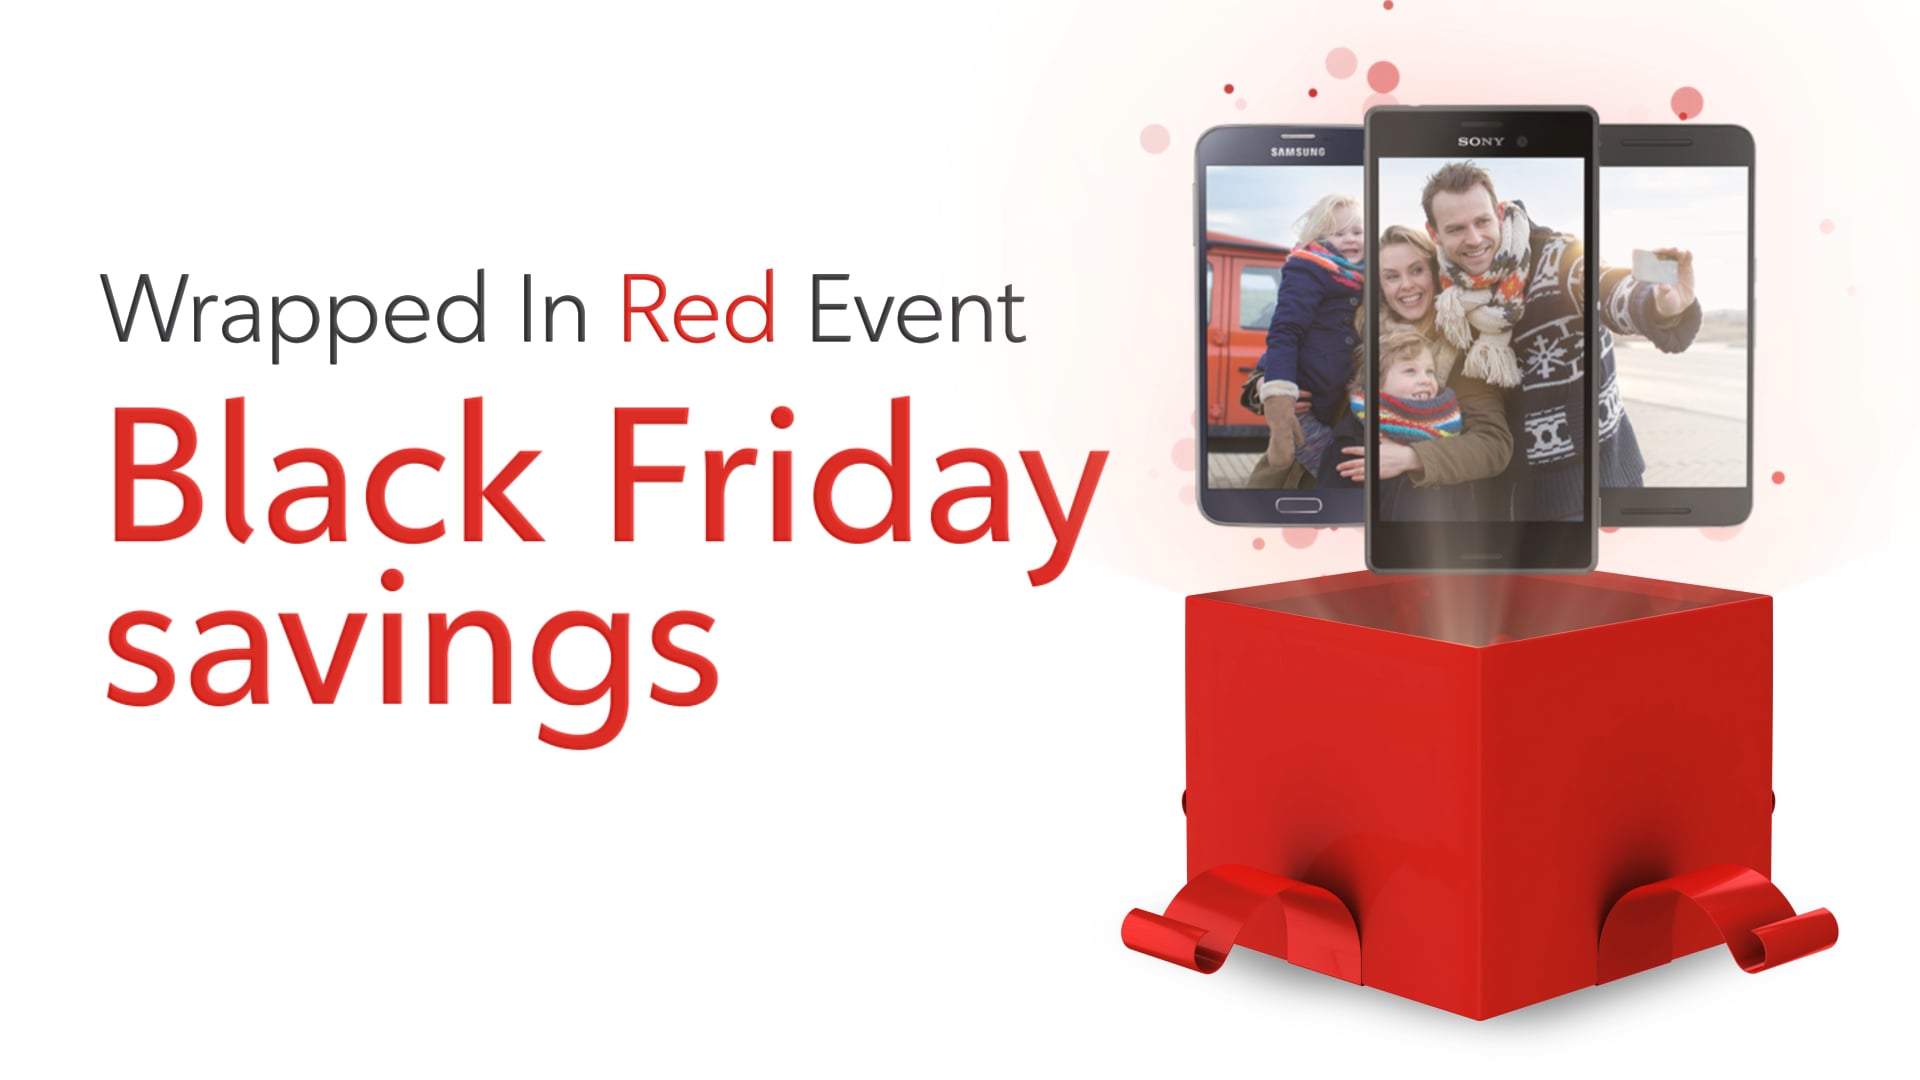 Rogers Black Friday Savings Event on Vimeo